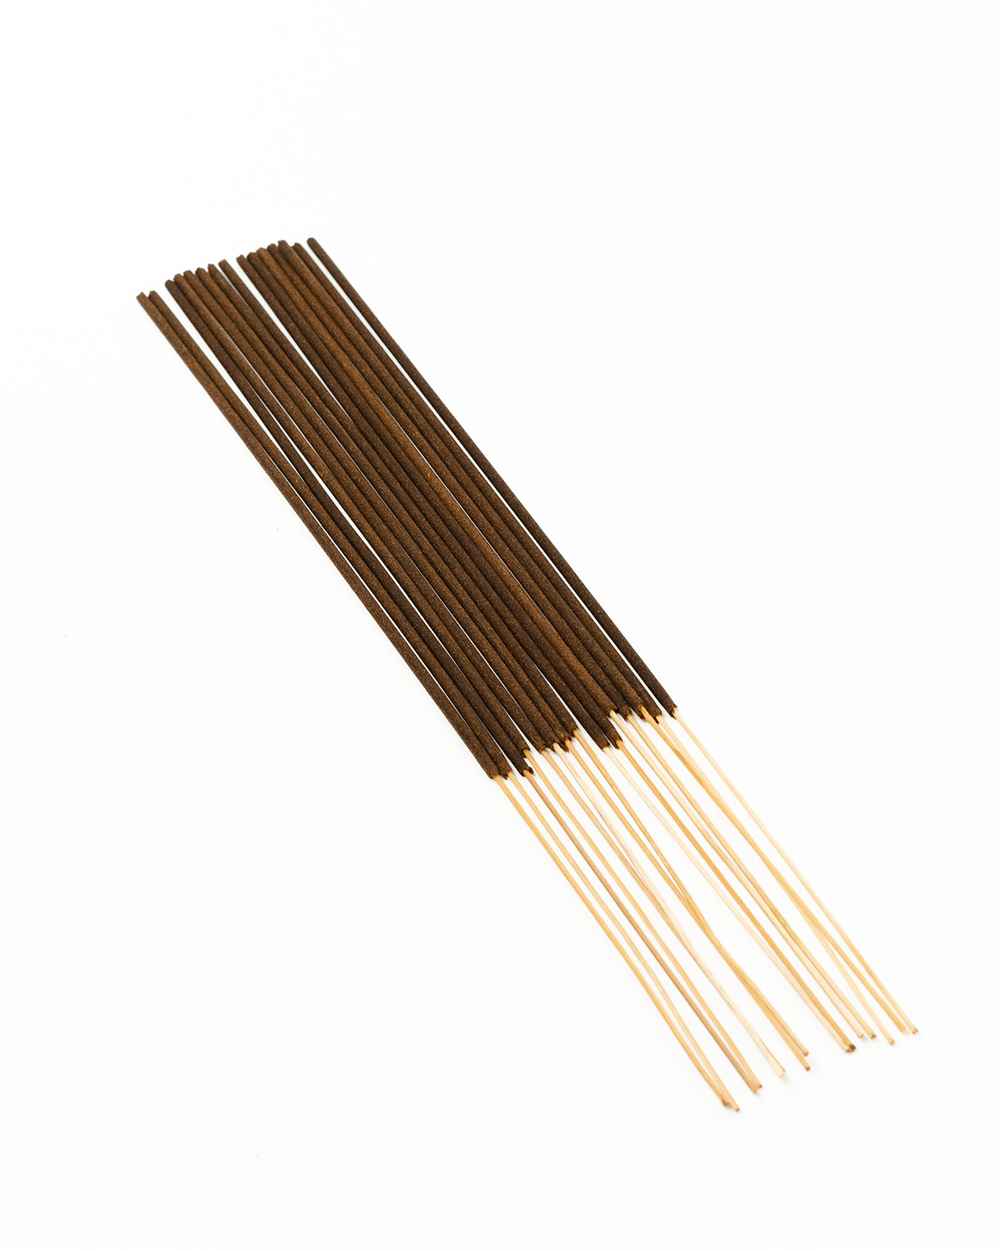 PENINSULA Incense Sticks - 15 Sticks